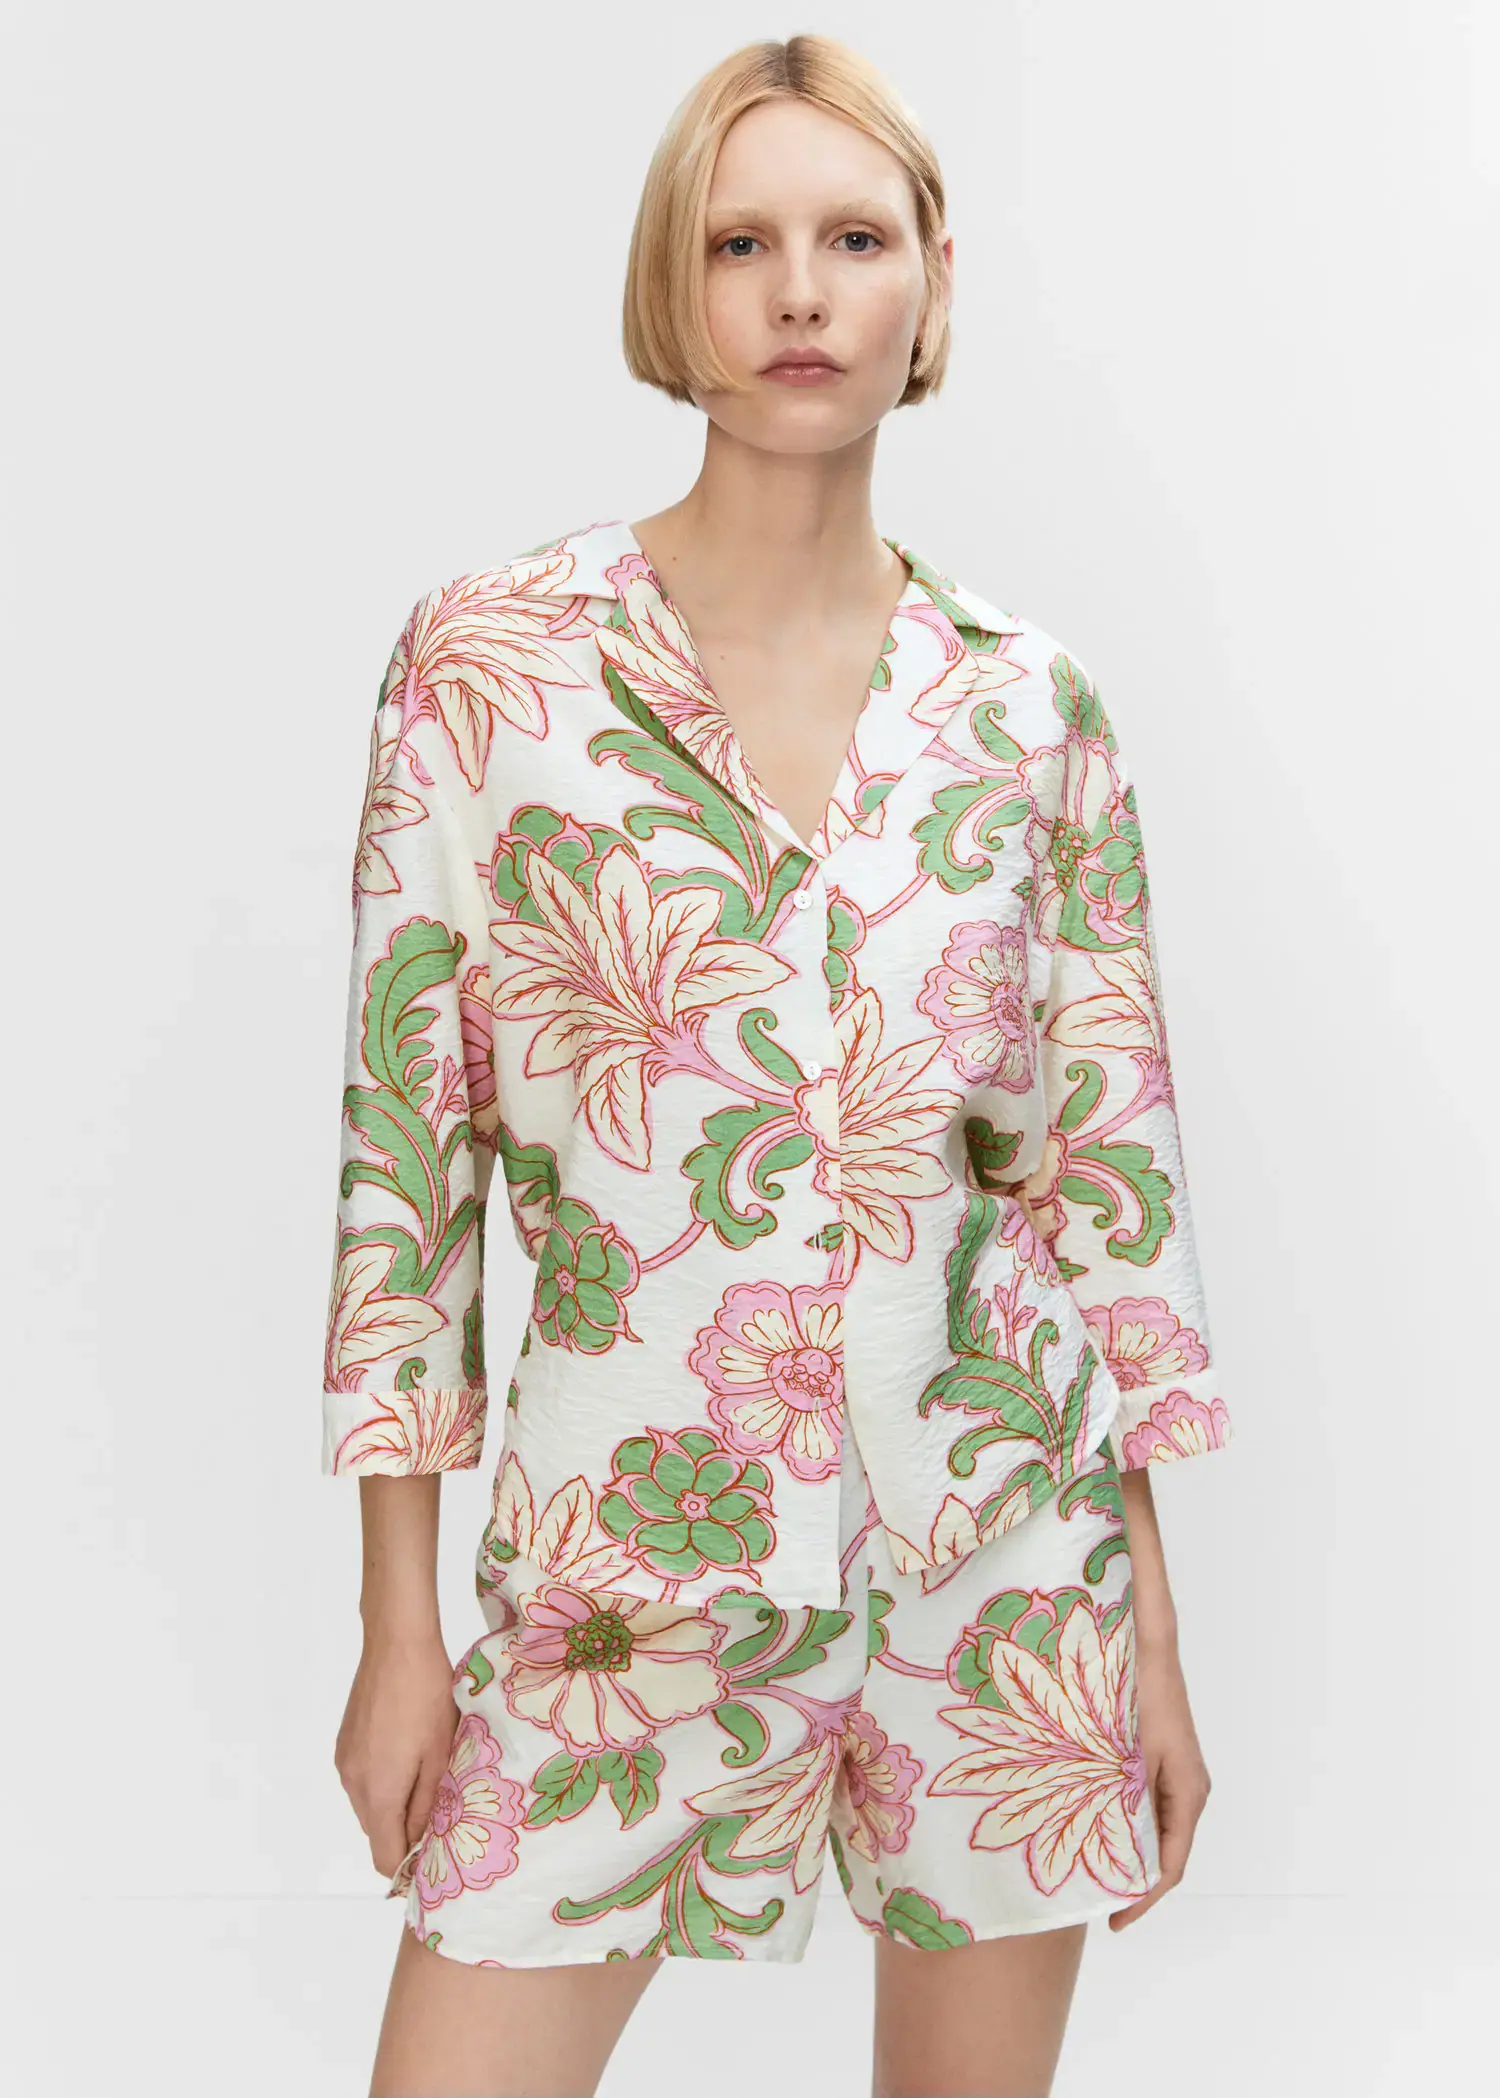 Mango Textured printed shirt. a woman in a floral print shirt and shorts. 